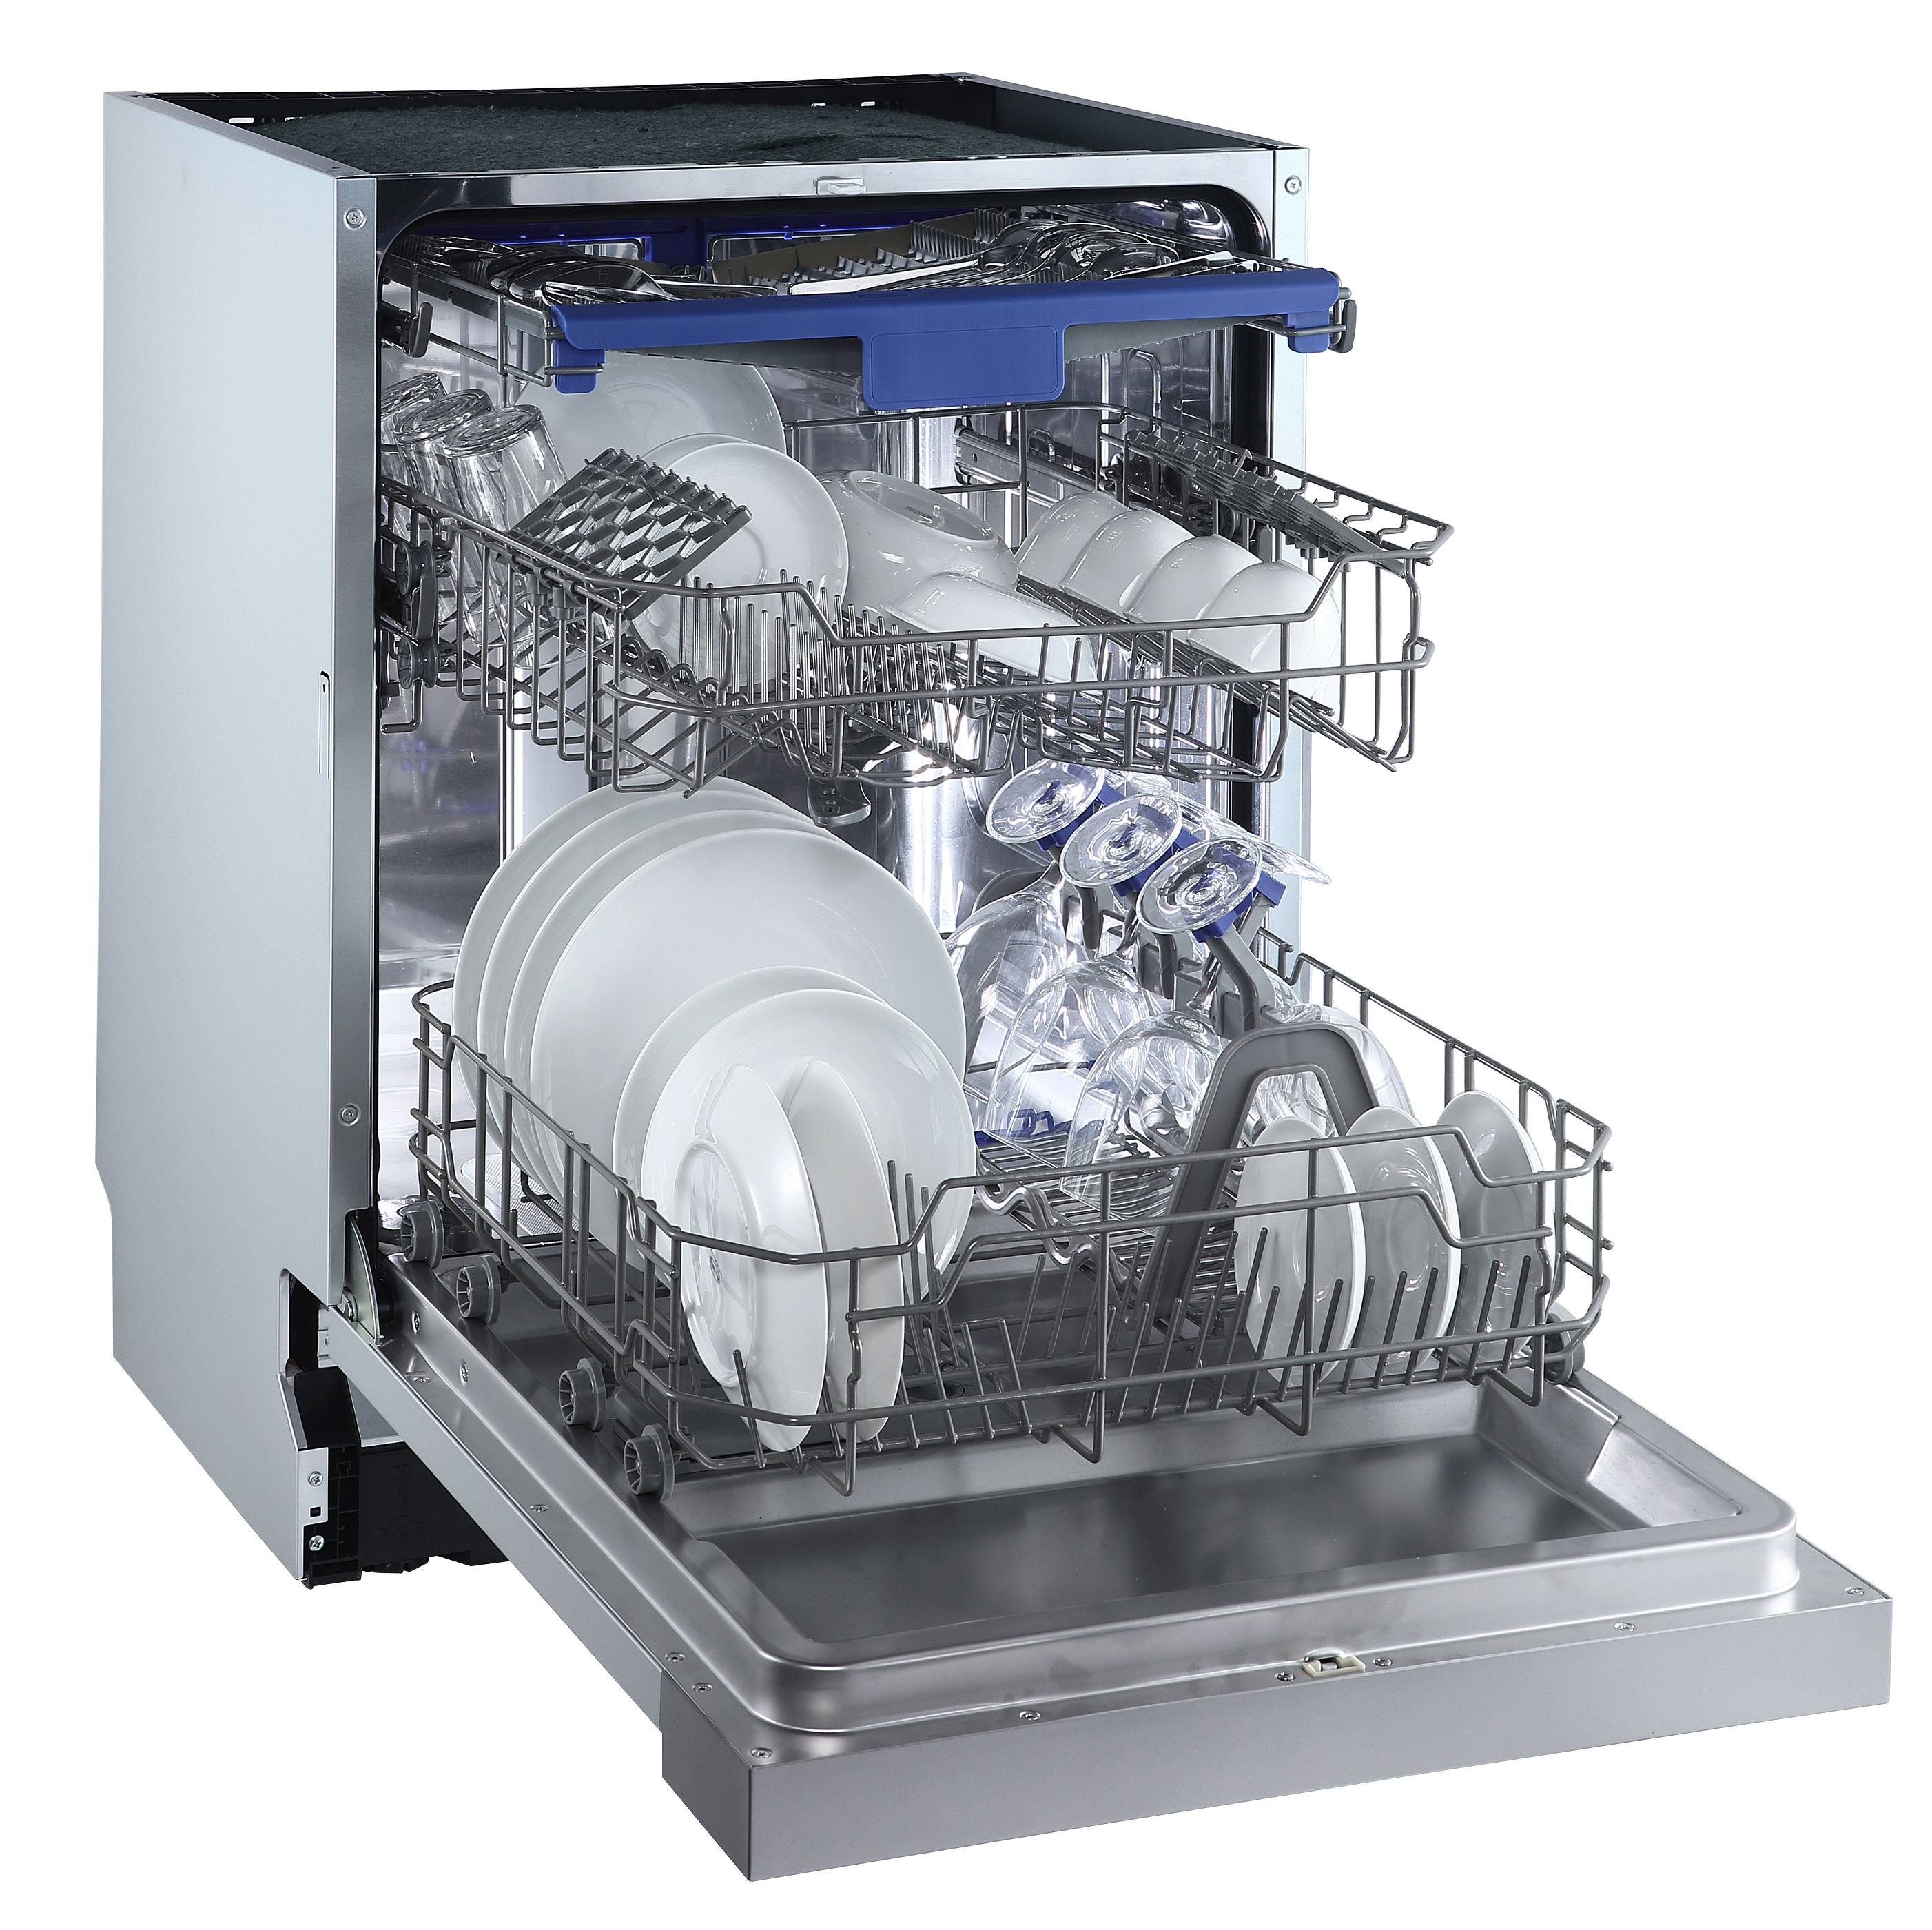 Geschirrspüler Einbau Spülmaschine Besteckschublade Aquastop 60 cm Respekta